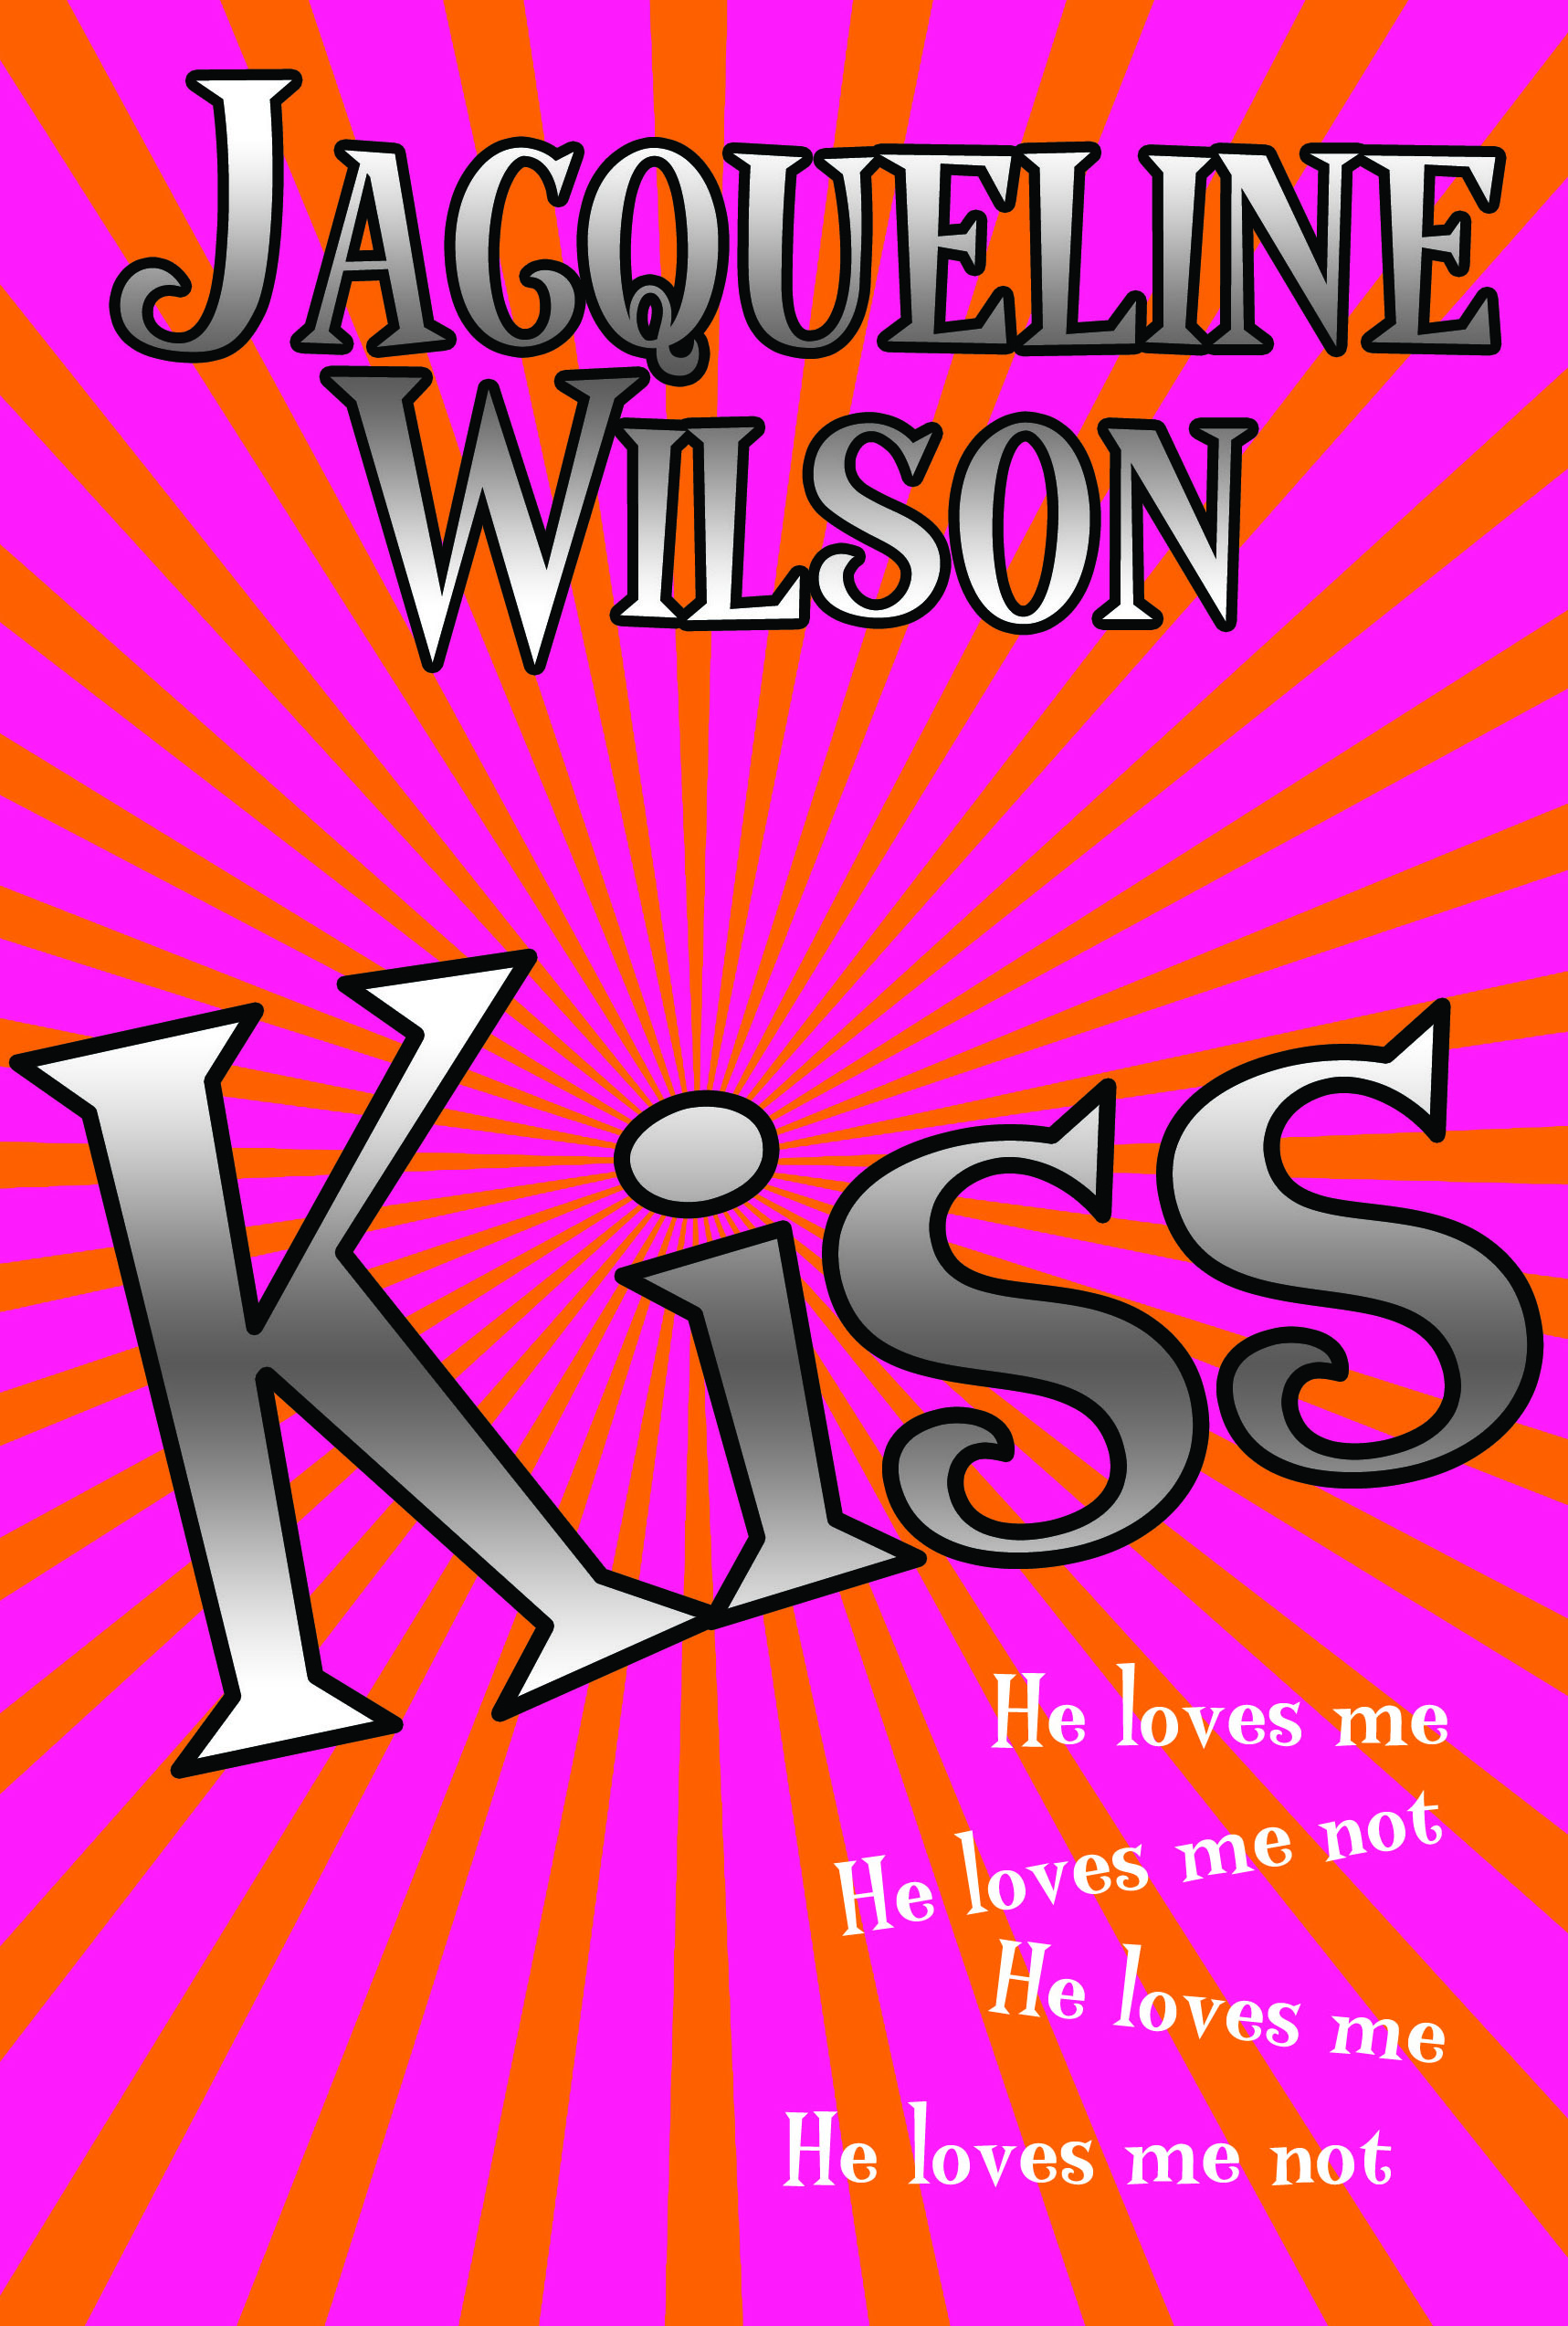 wilson-kiss.jpg